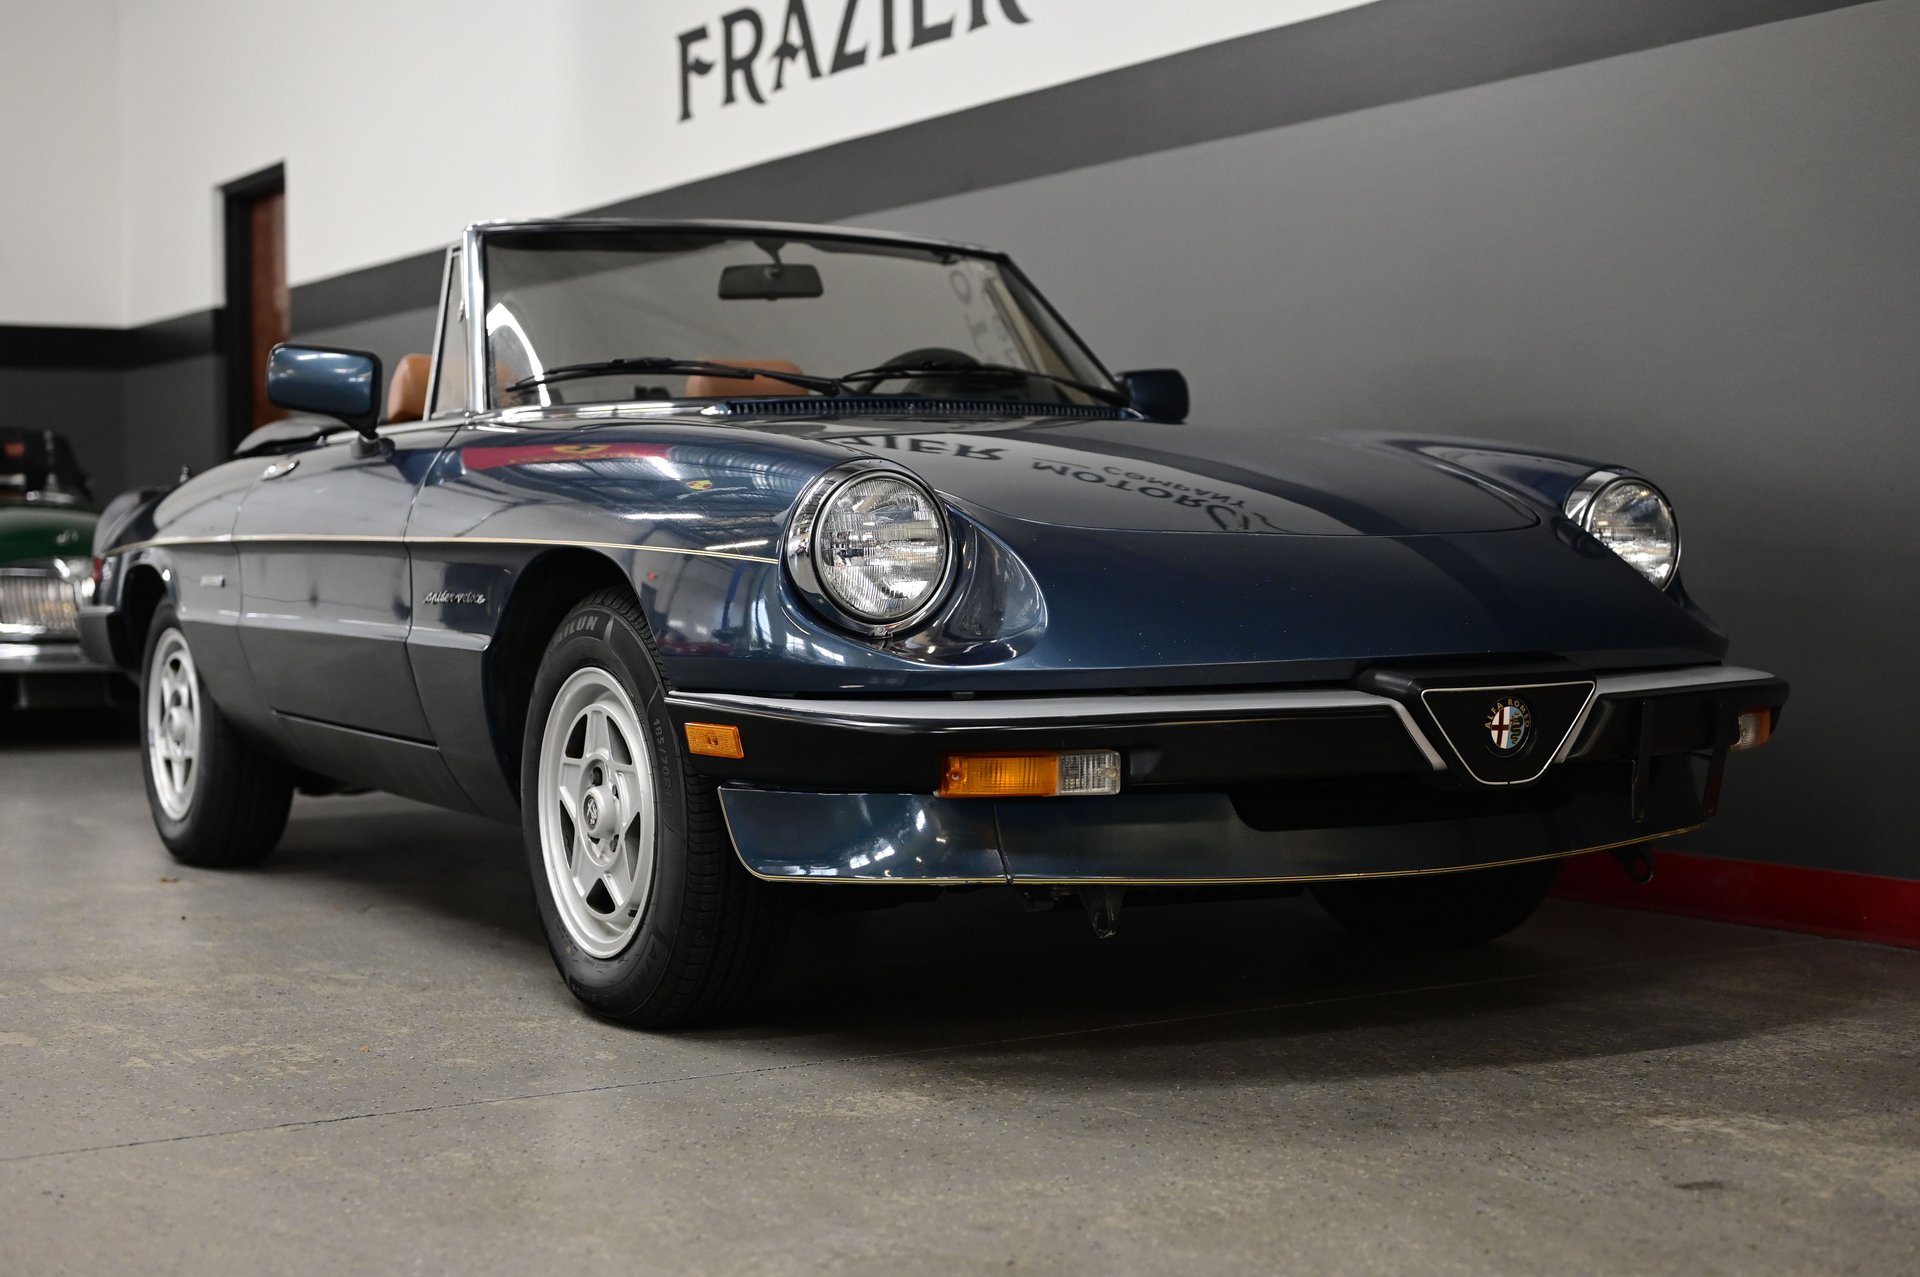 056303 | 1988 Alfa Romeo VELOCE SIDER | Frazier Motorcar Company